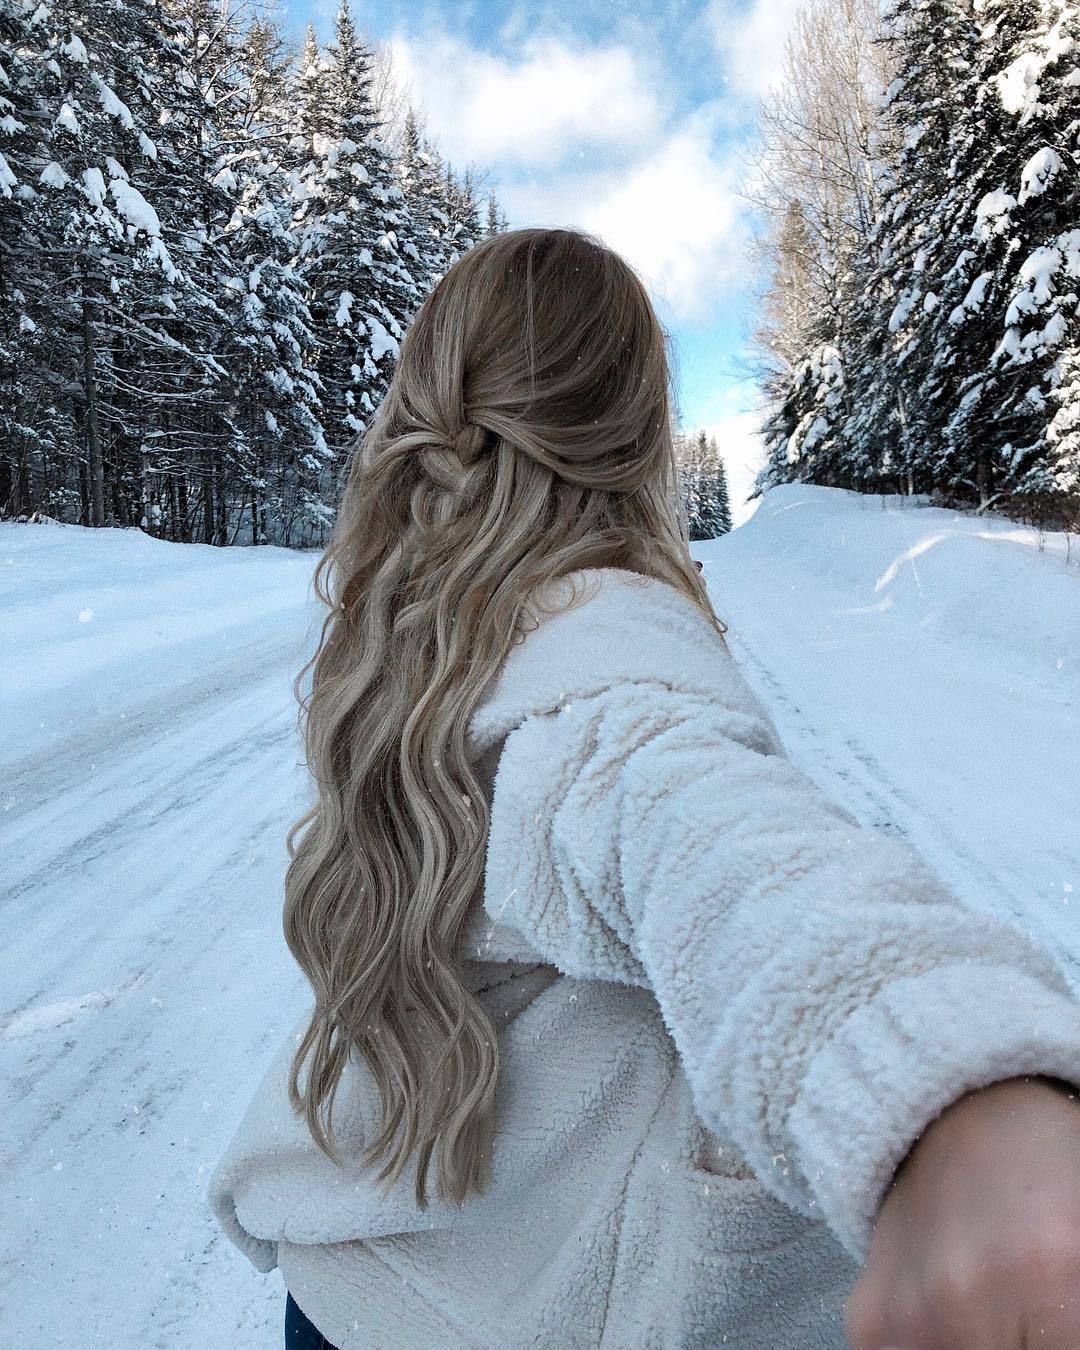 Фото девушки зимой со спины на аву 2019